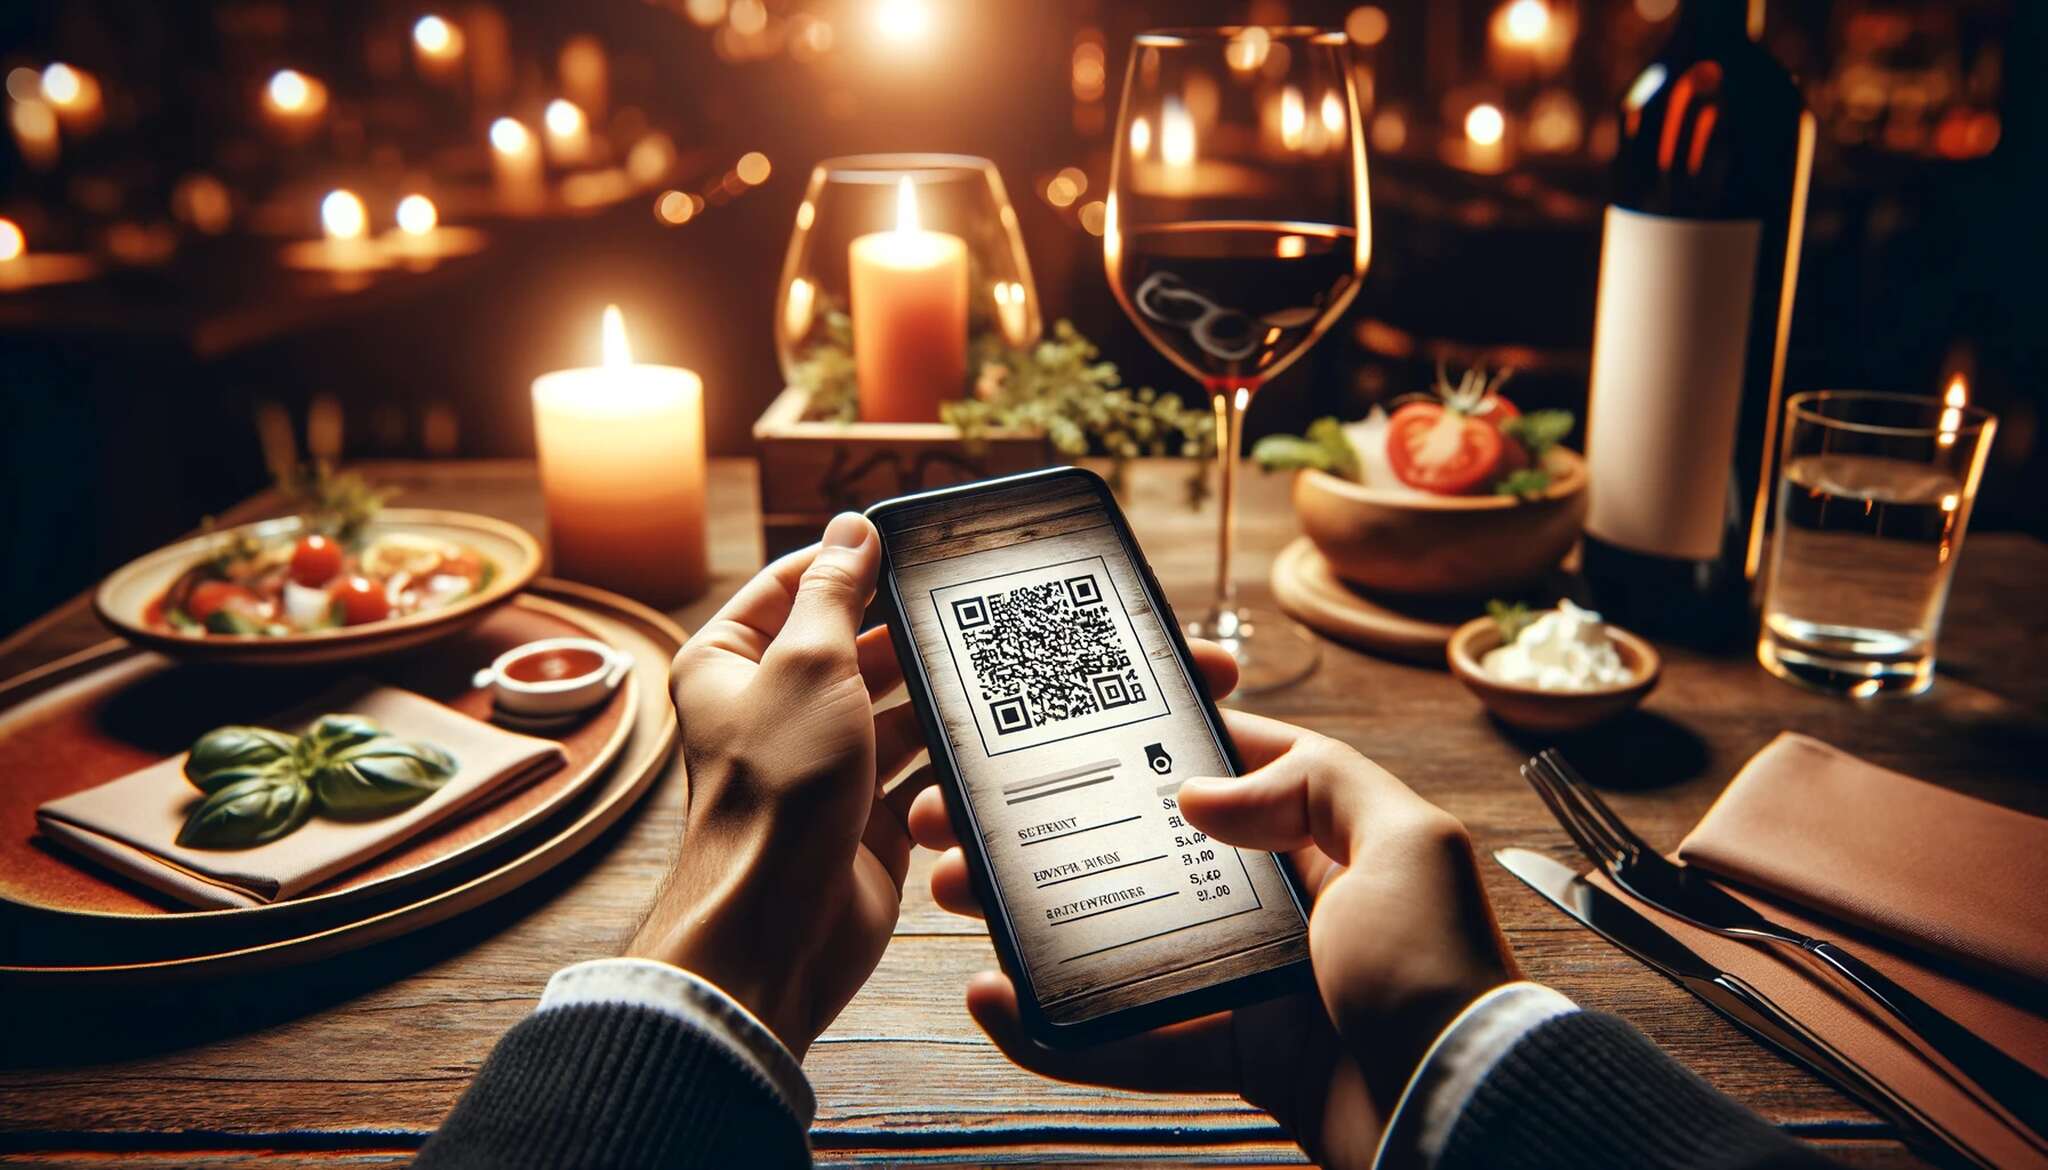 A hand scanning a restaurant menu using a smartphone